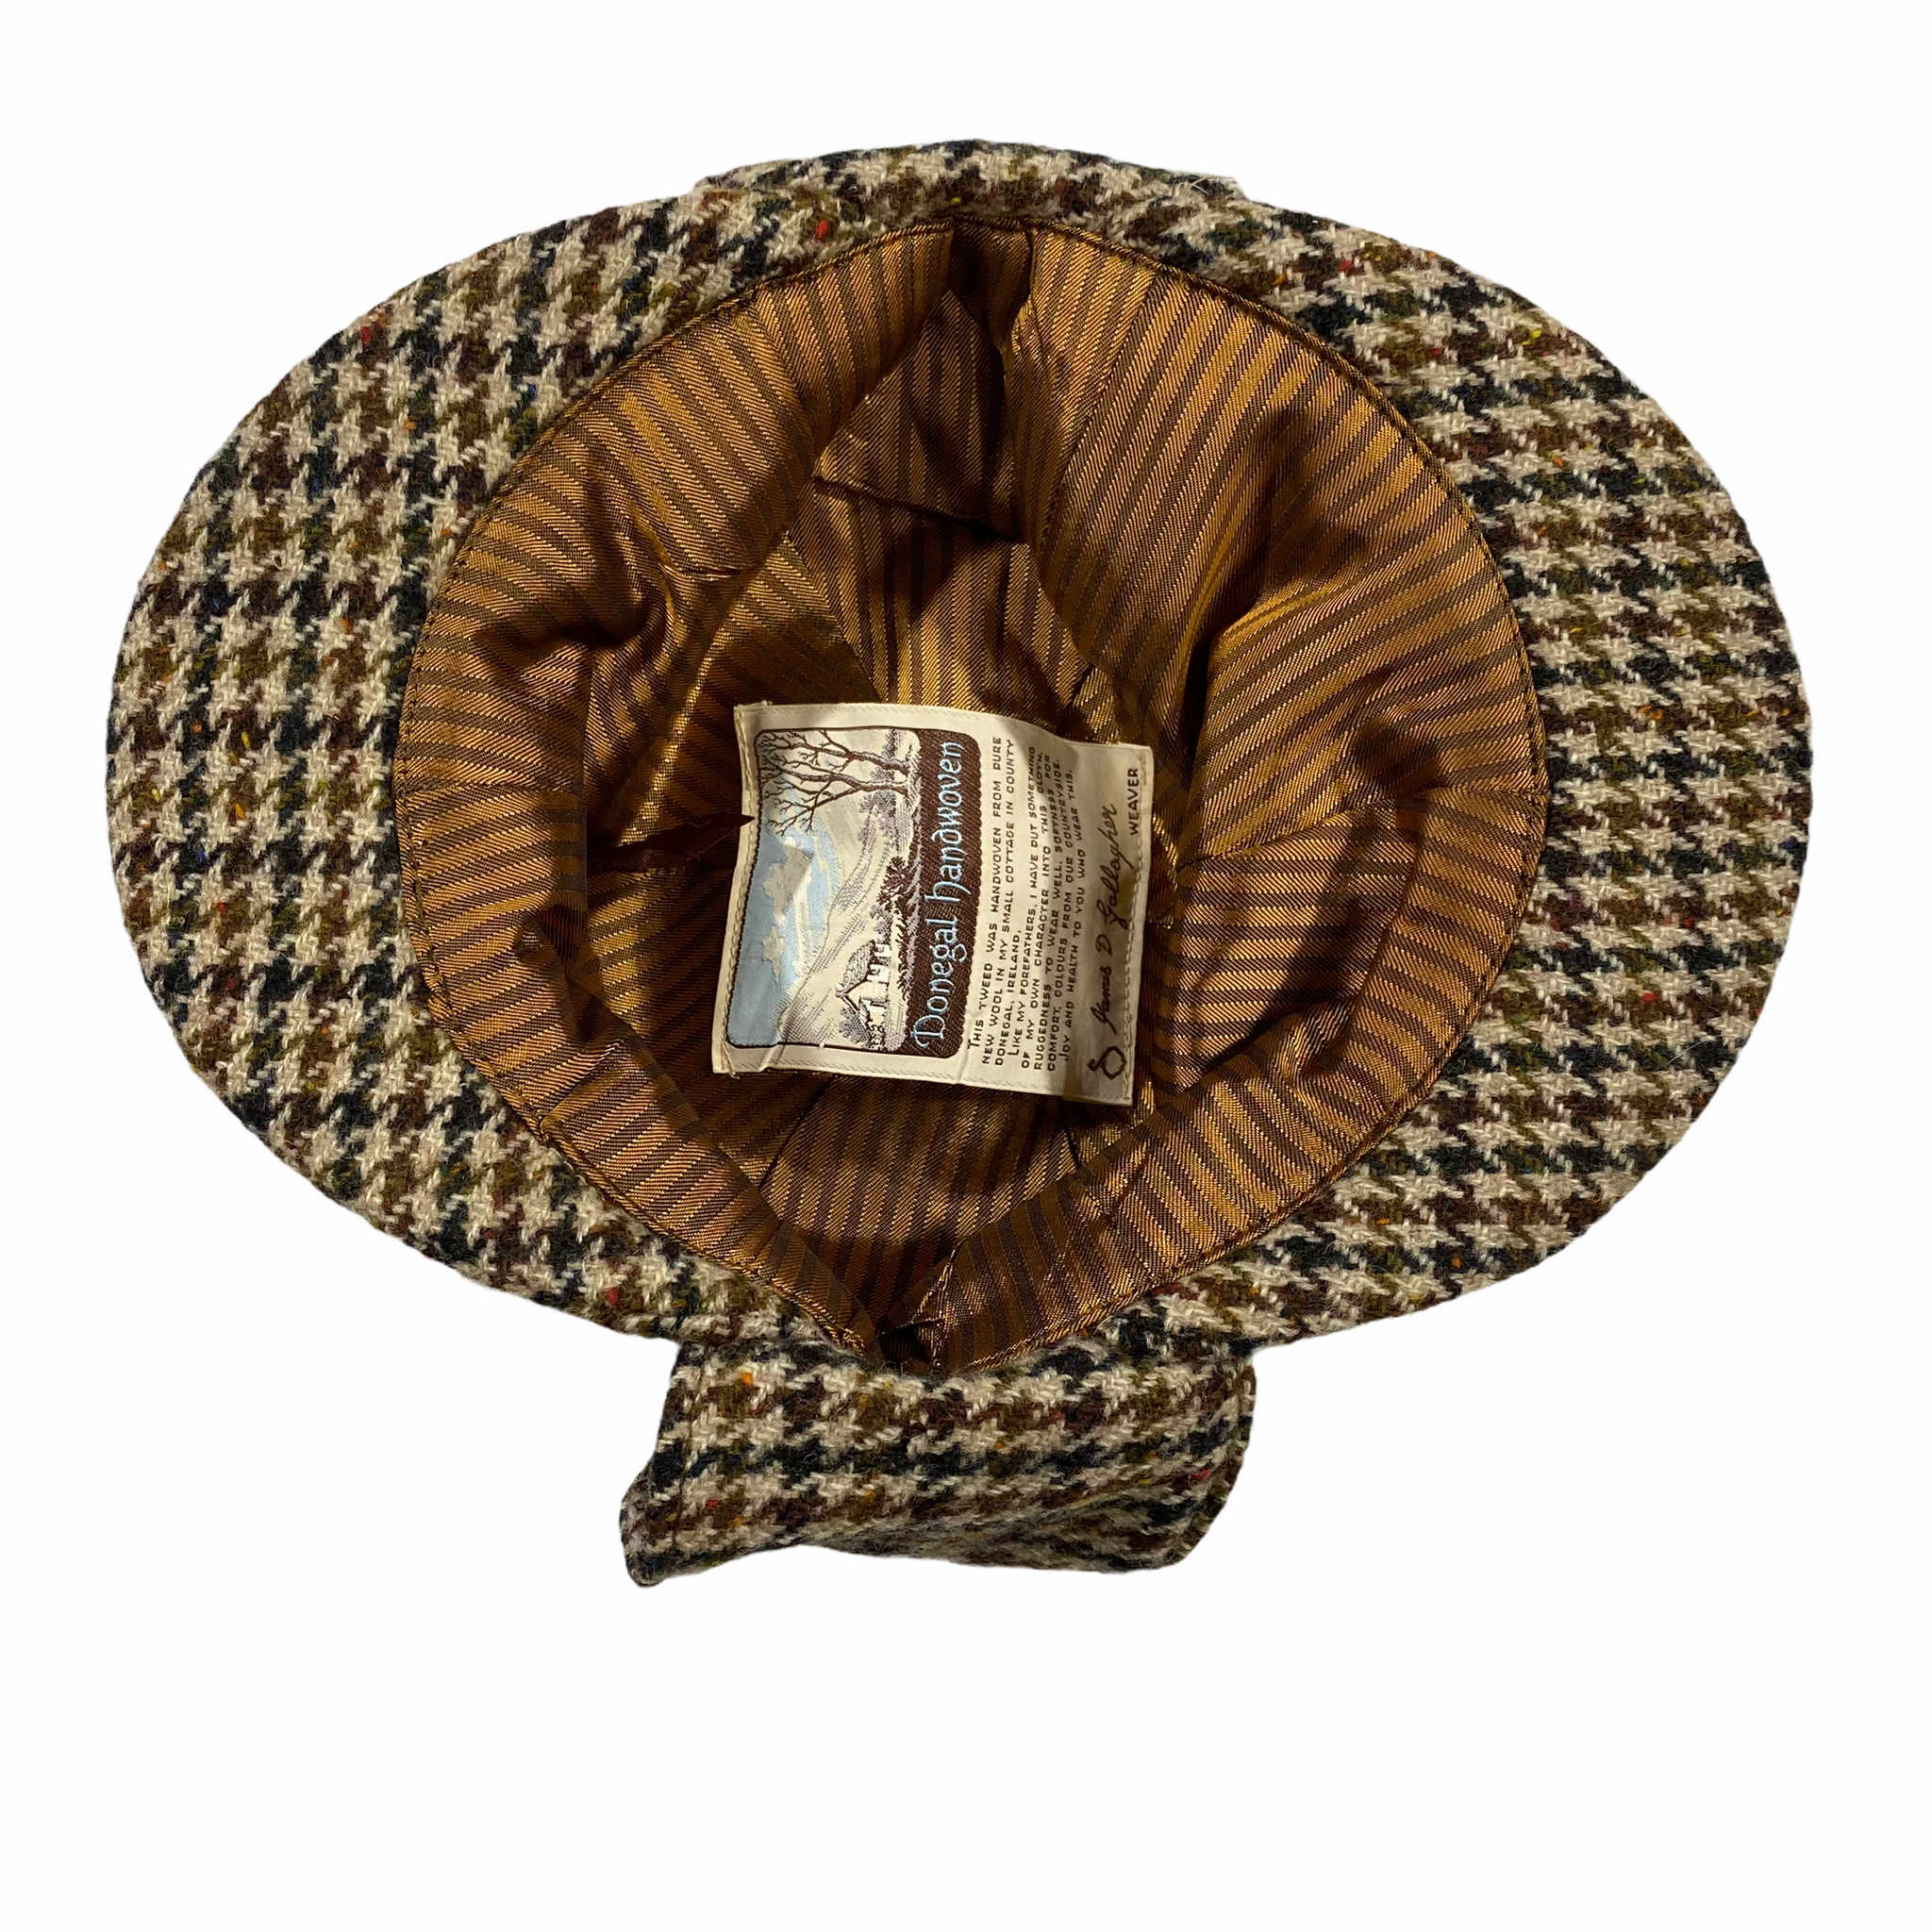 Wool tweed sherlock hat. sz7